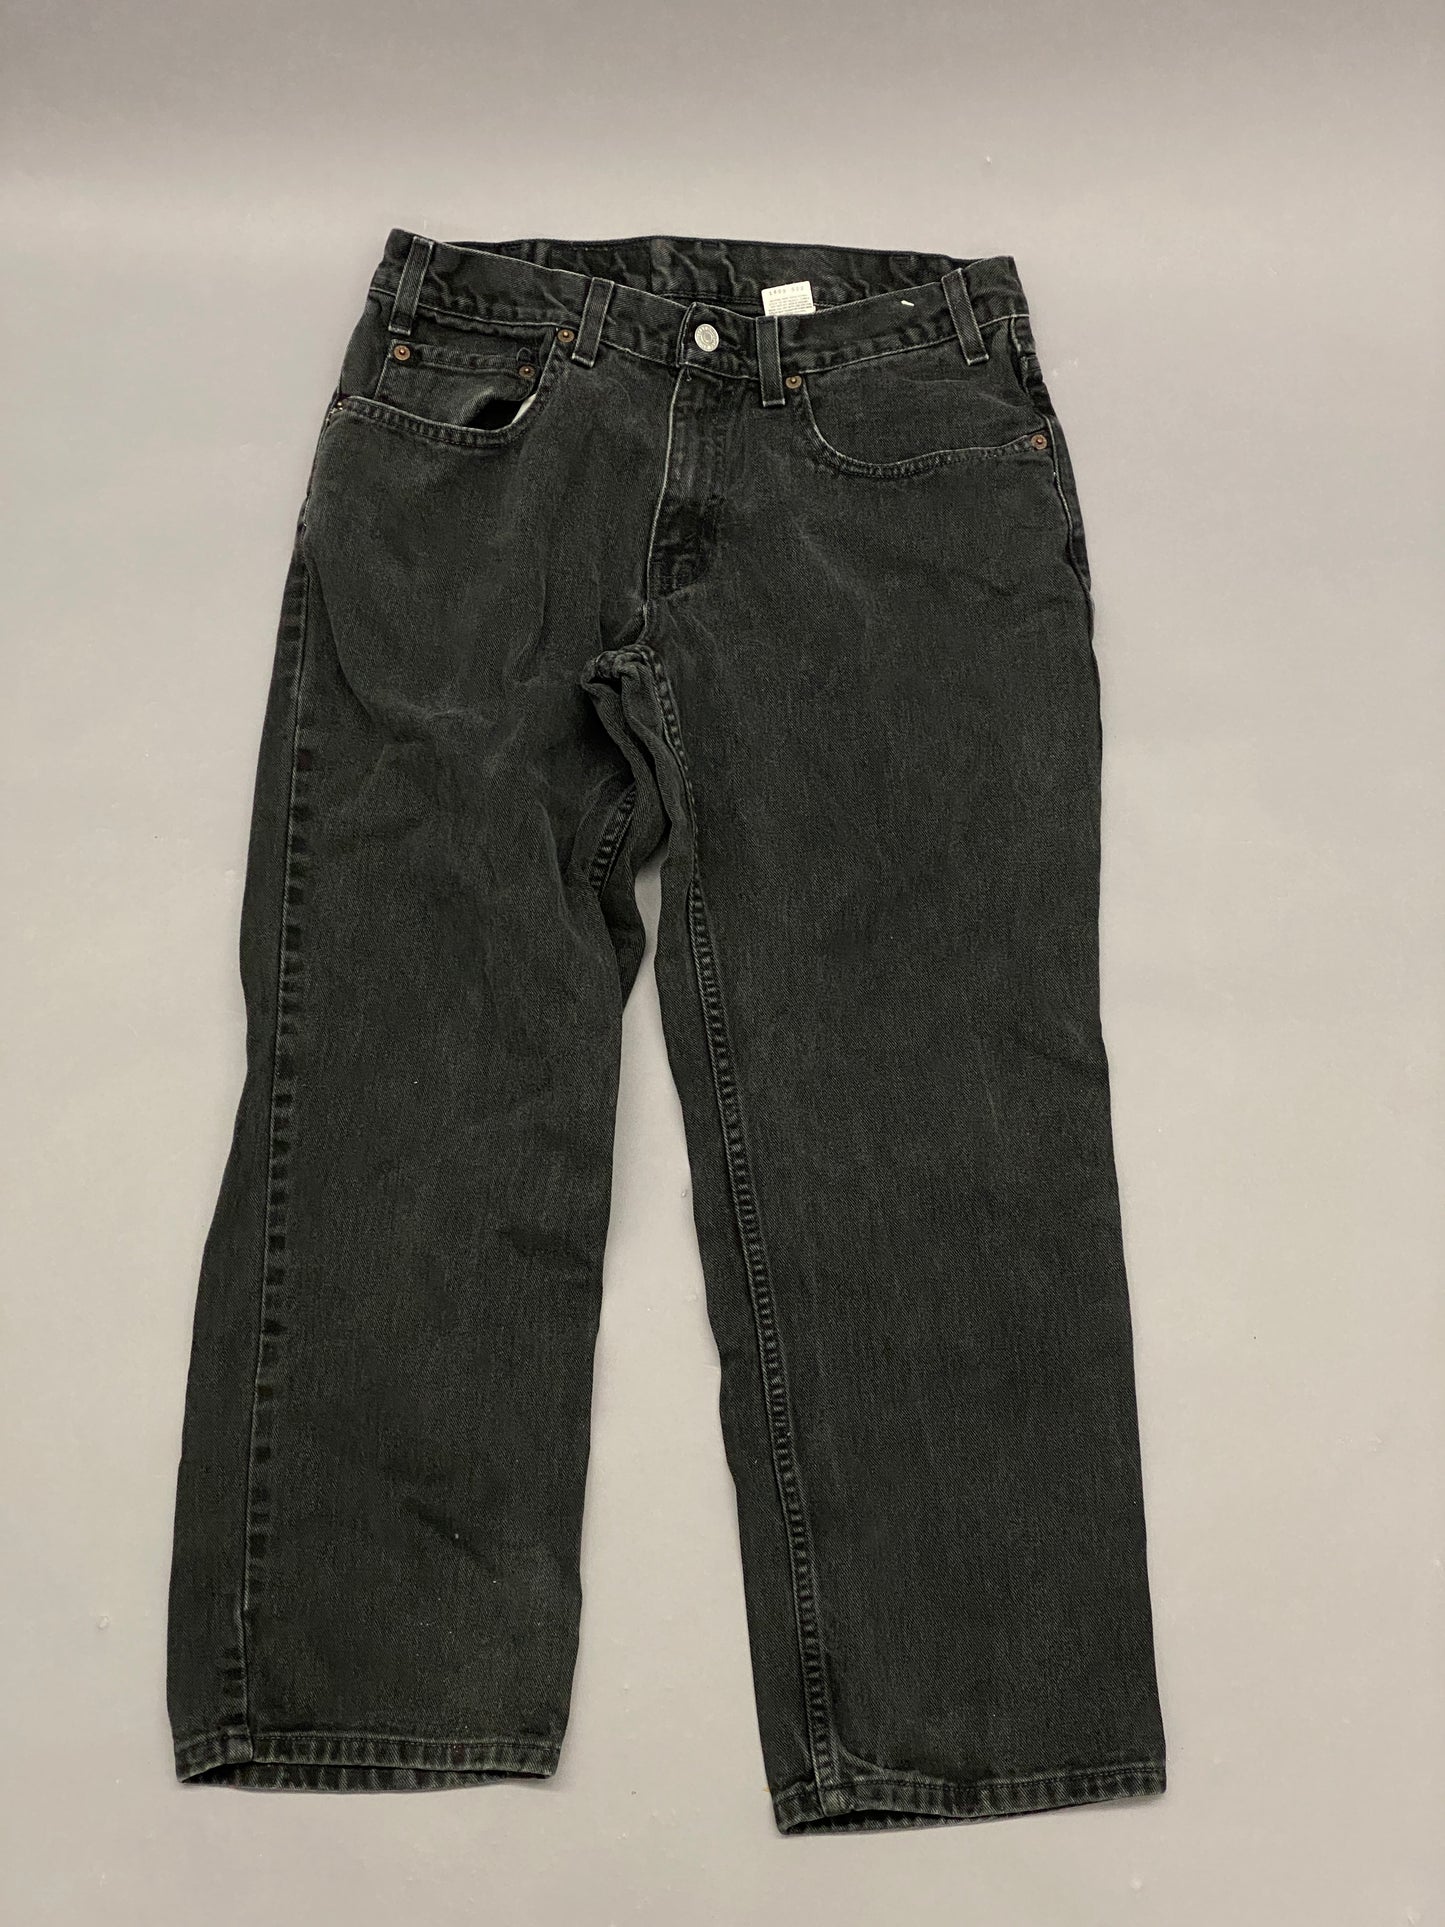 Levis 550 Husky Vintage Jeans - 33 x 28